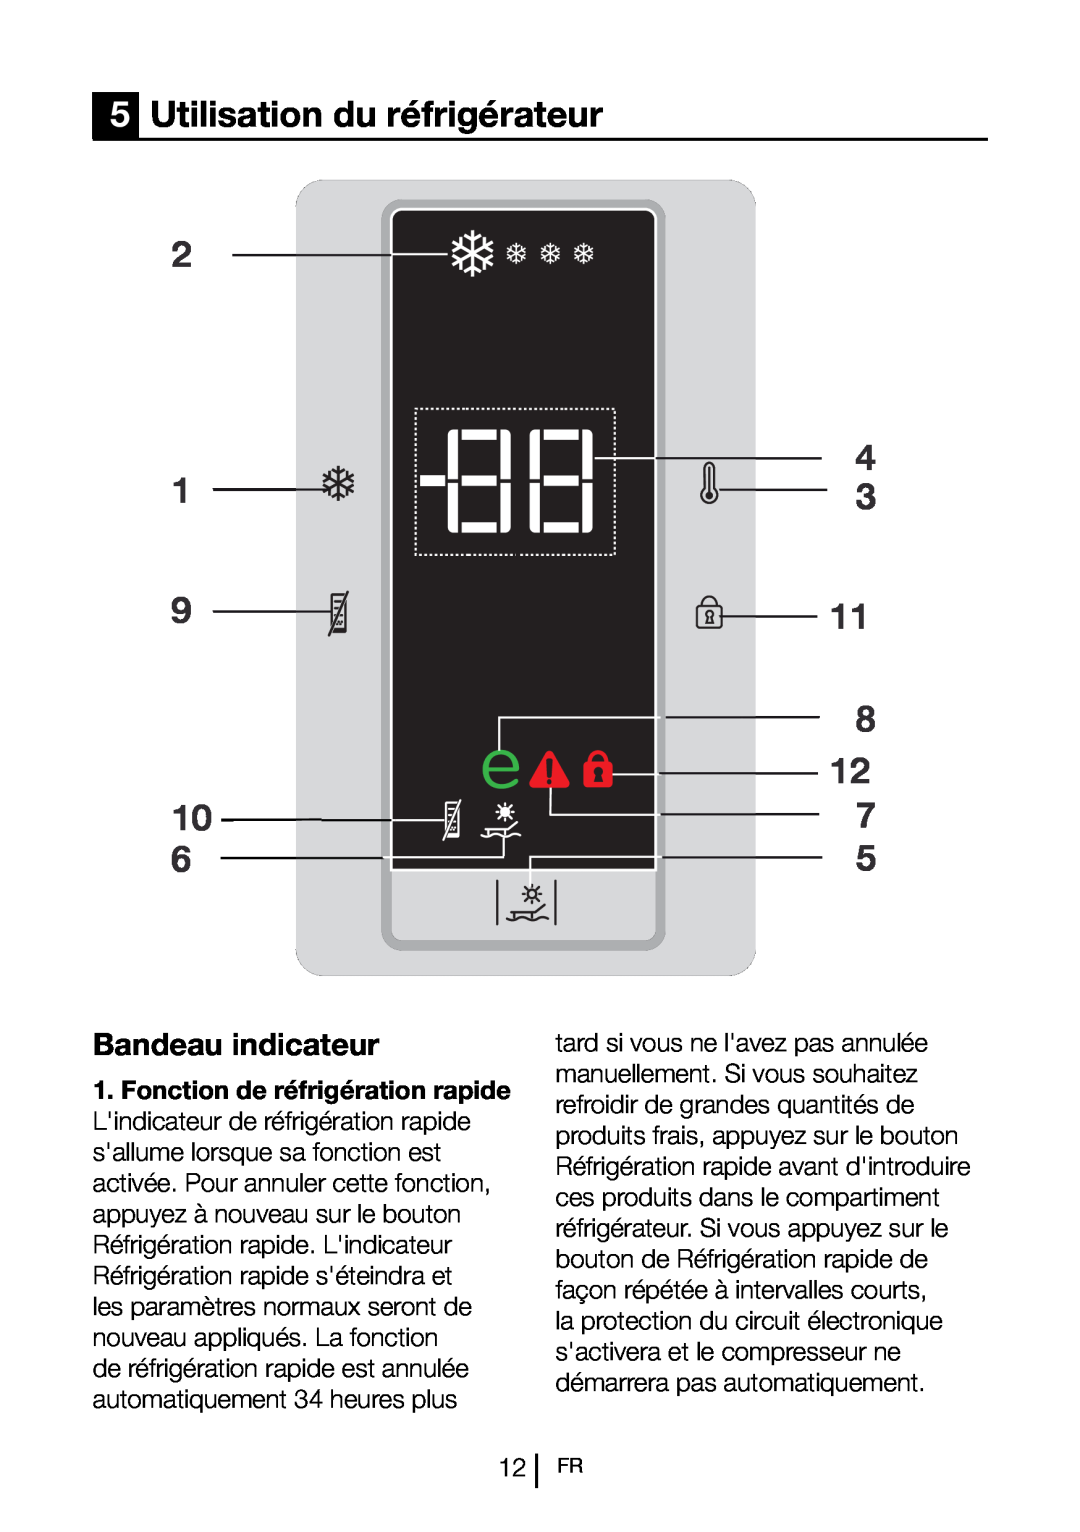 Blomberg SND 9681 XD Utilisation du réfrigérateur, Bandeau indicateur, Fonction de réfrigération rapide 